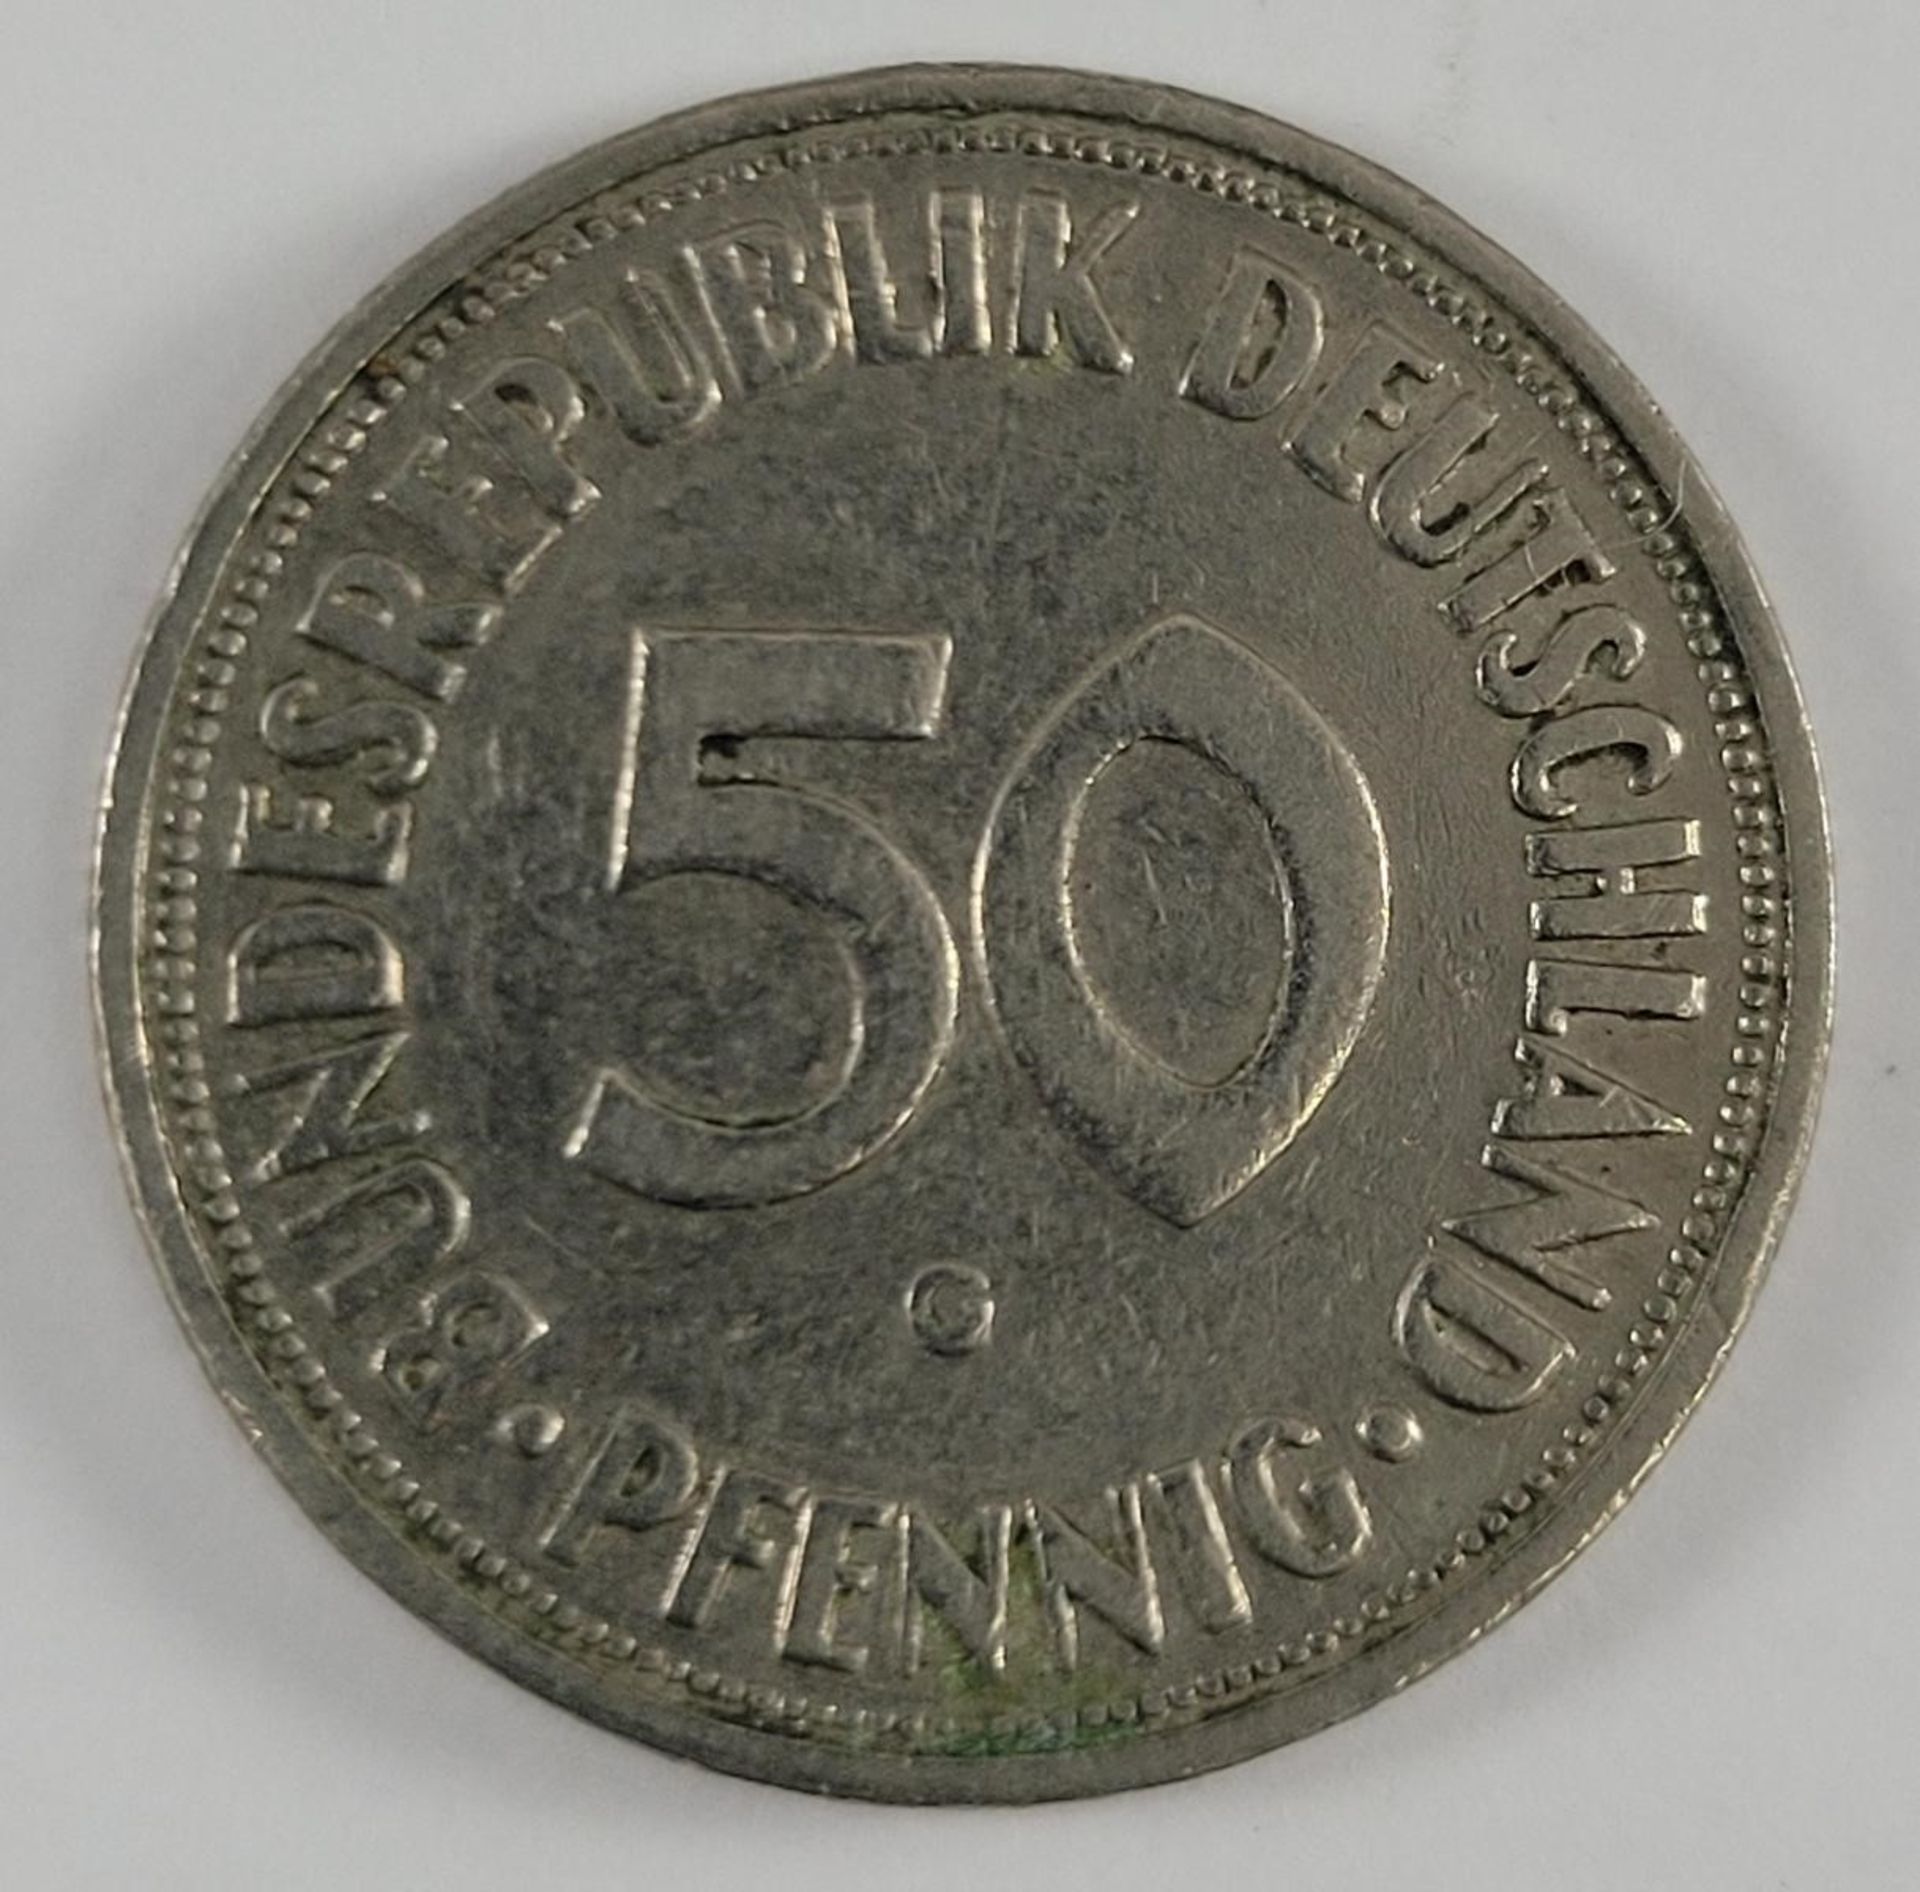 BRD - 50 Pfennig 1950 G, J.379 - Image 2 of 2